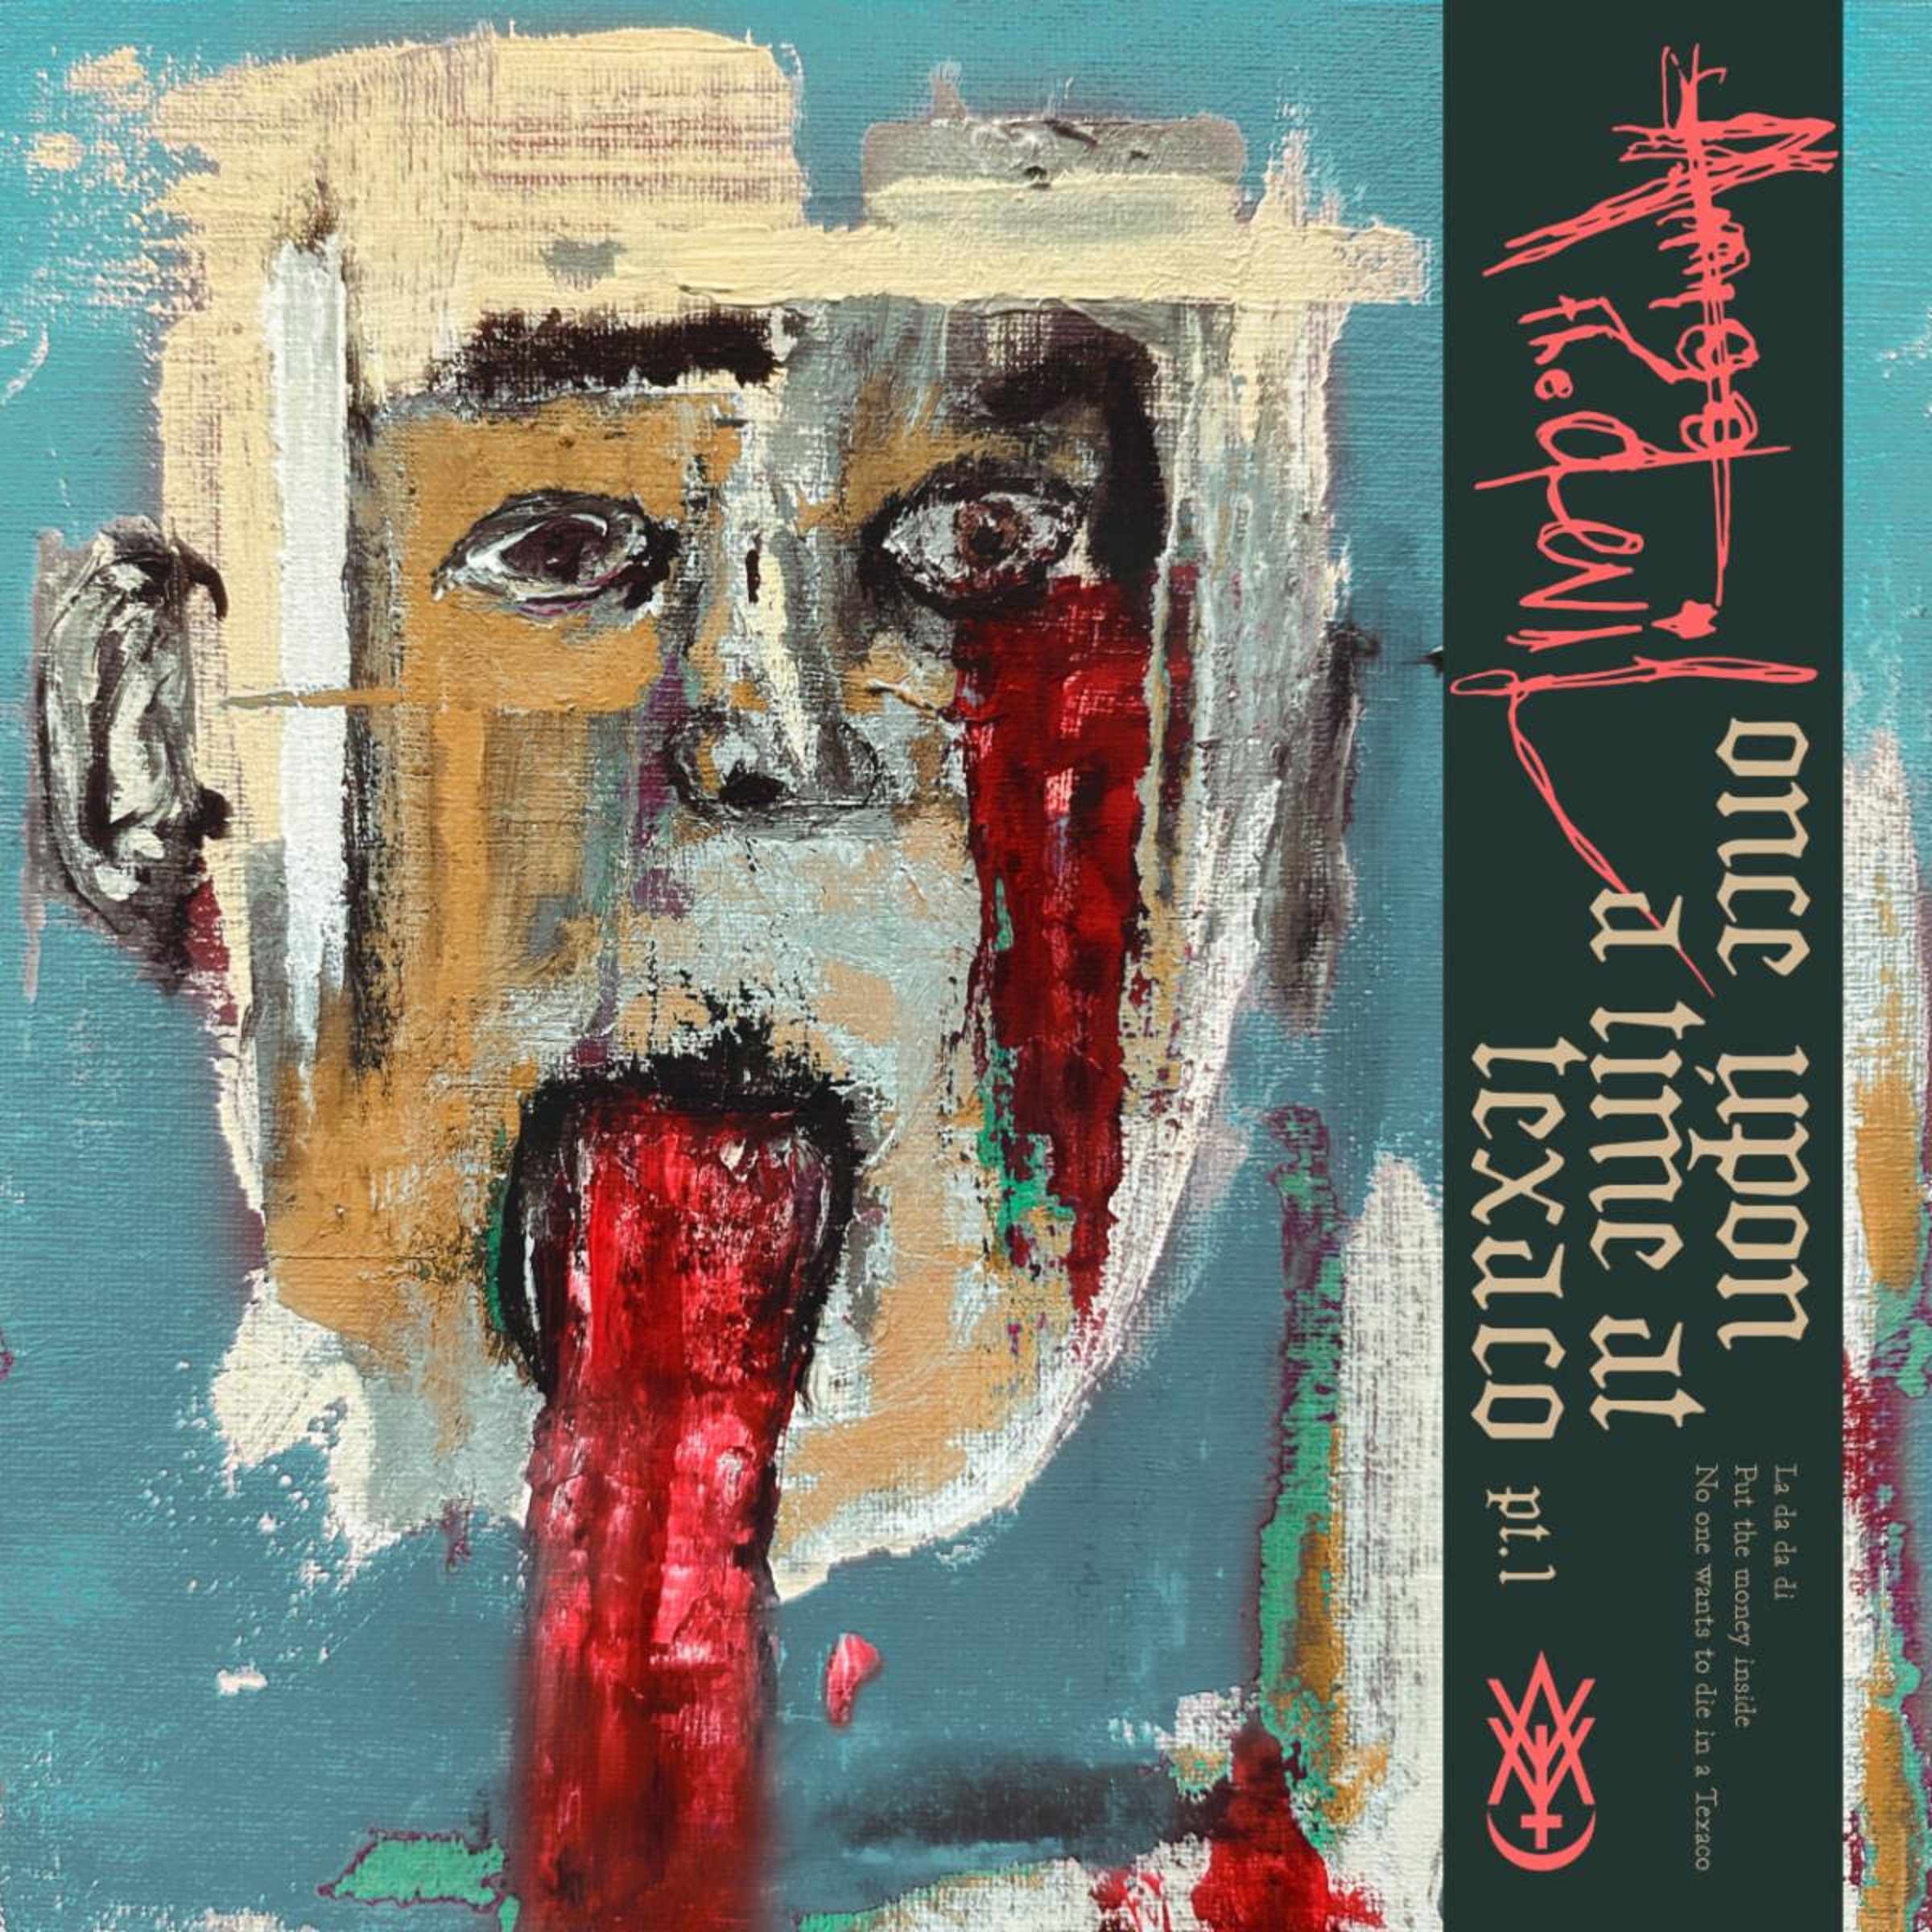 Unruly Storyteller Amigo the Devil Drops Barn-Burner Single Ahead of 2/23 Album Release